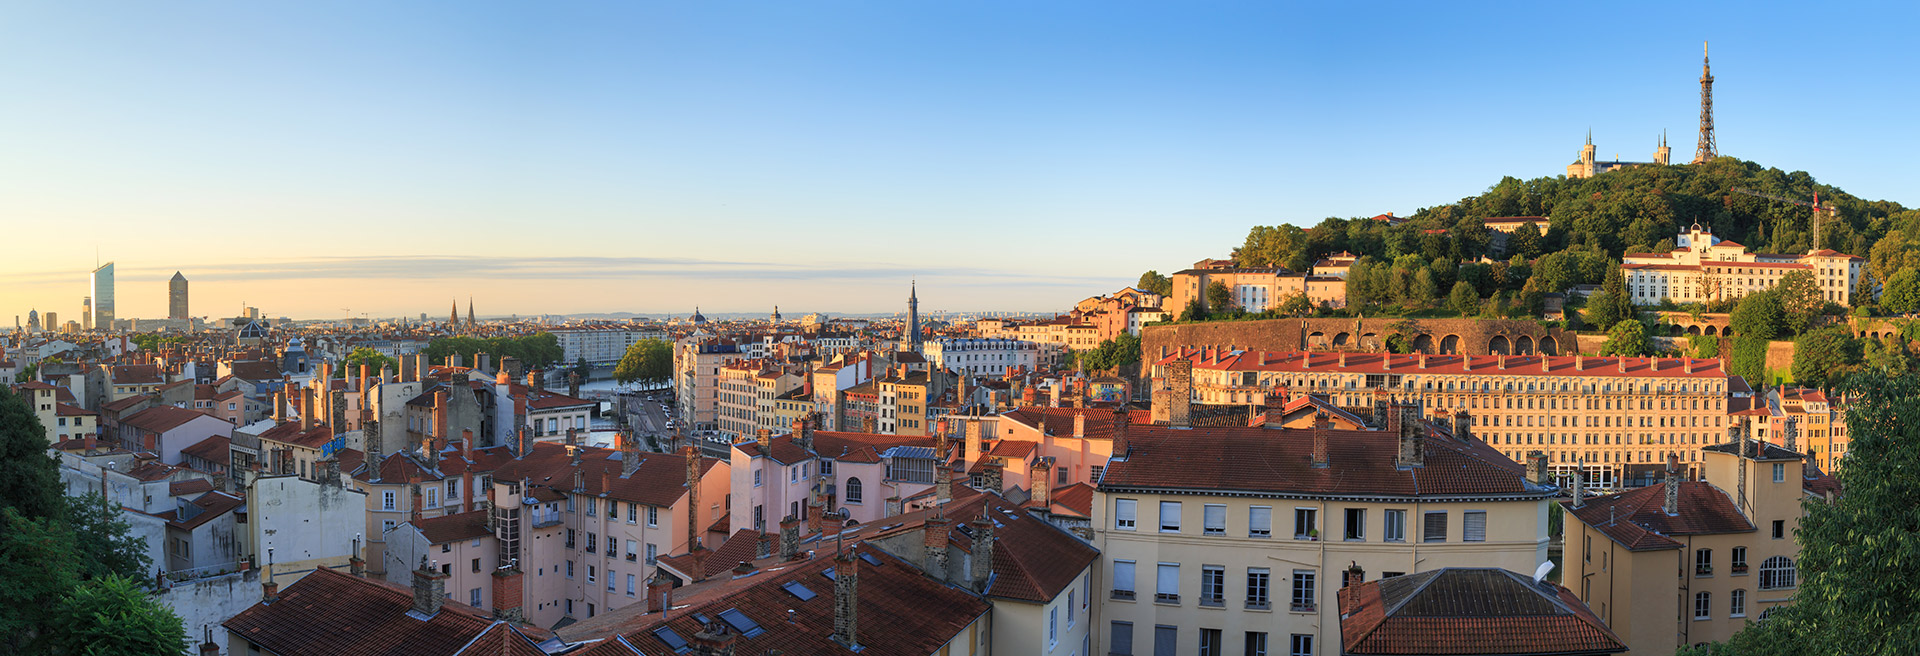 Panorama sur Lyon depuis la Croix-Rousse © Sandeer Van Der Werf / Shutterstock